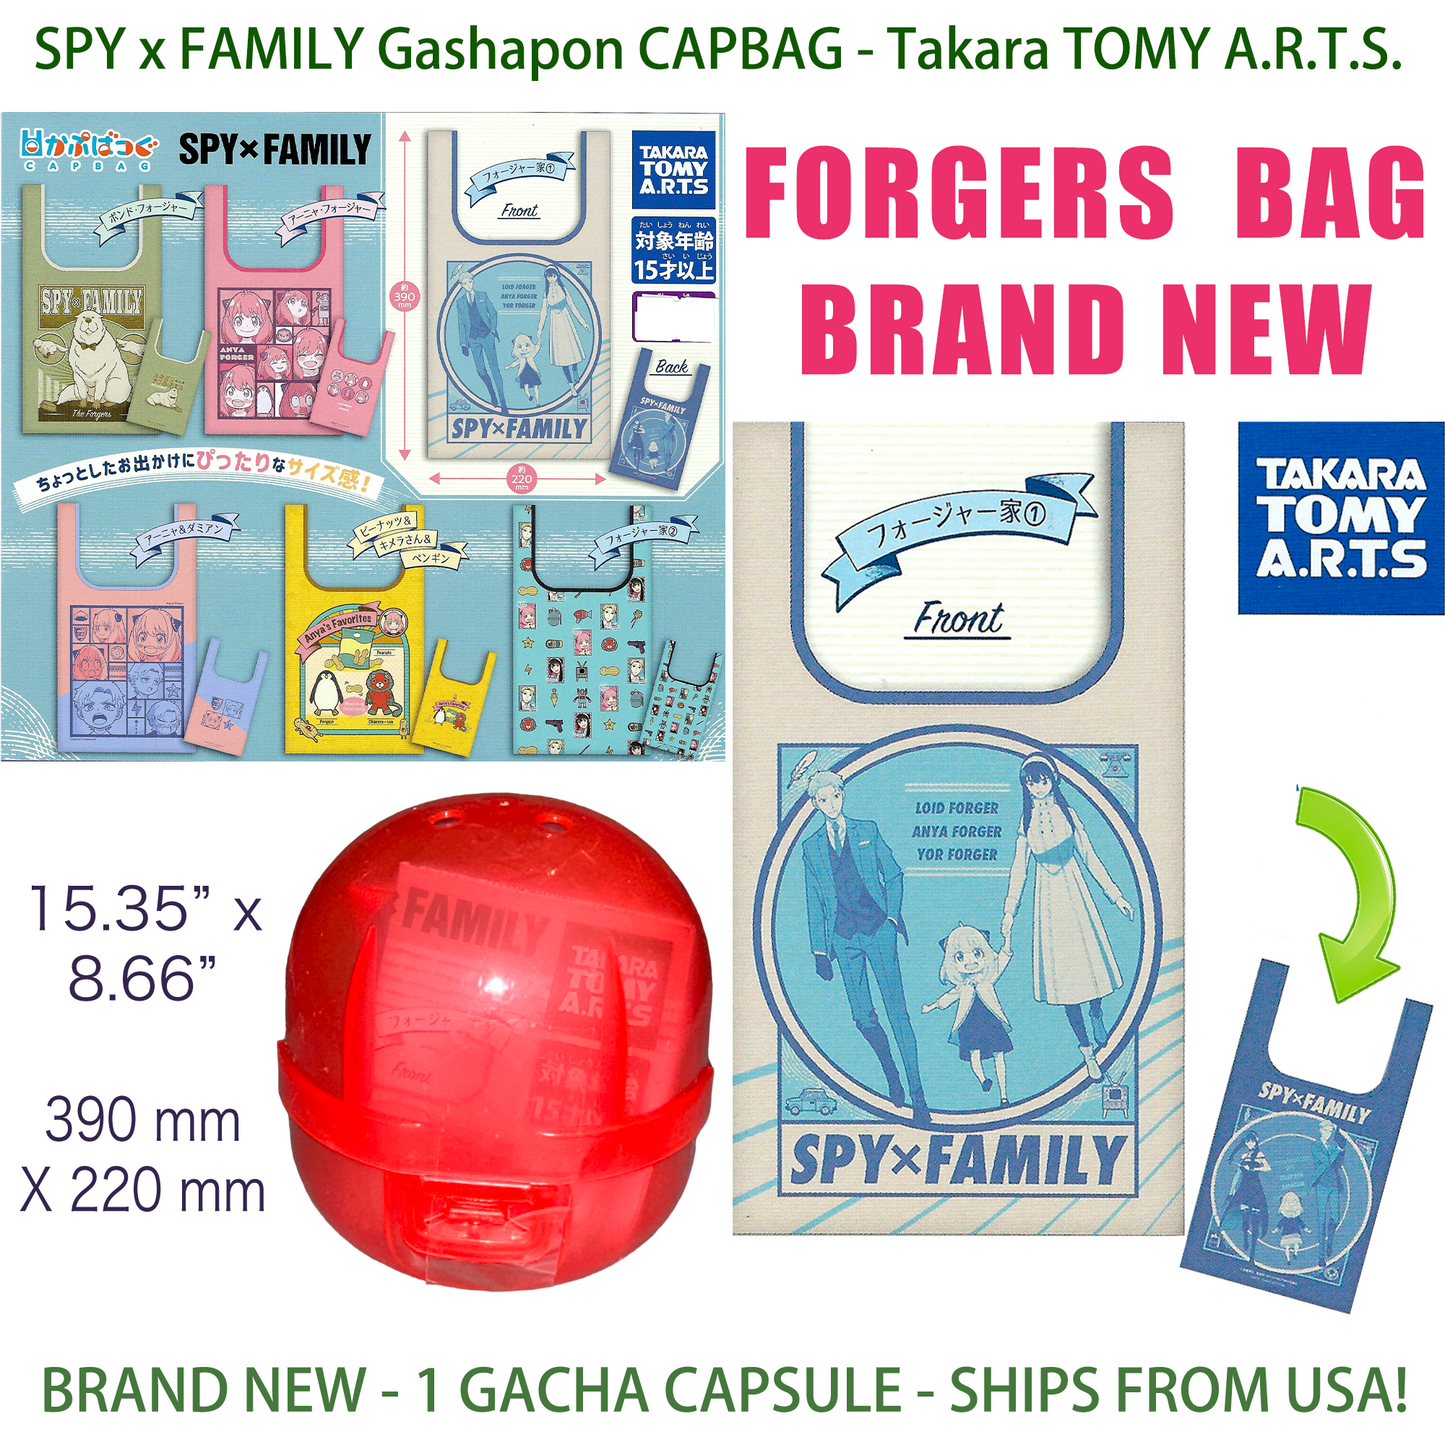 THE FORGERS - SPY x FAMILY CAPBAG - SPYxFAMILY Gashapon - TAKARA TOMY ARTS (NEW)